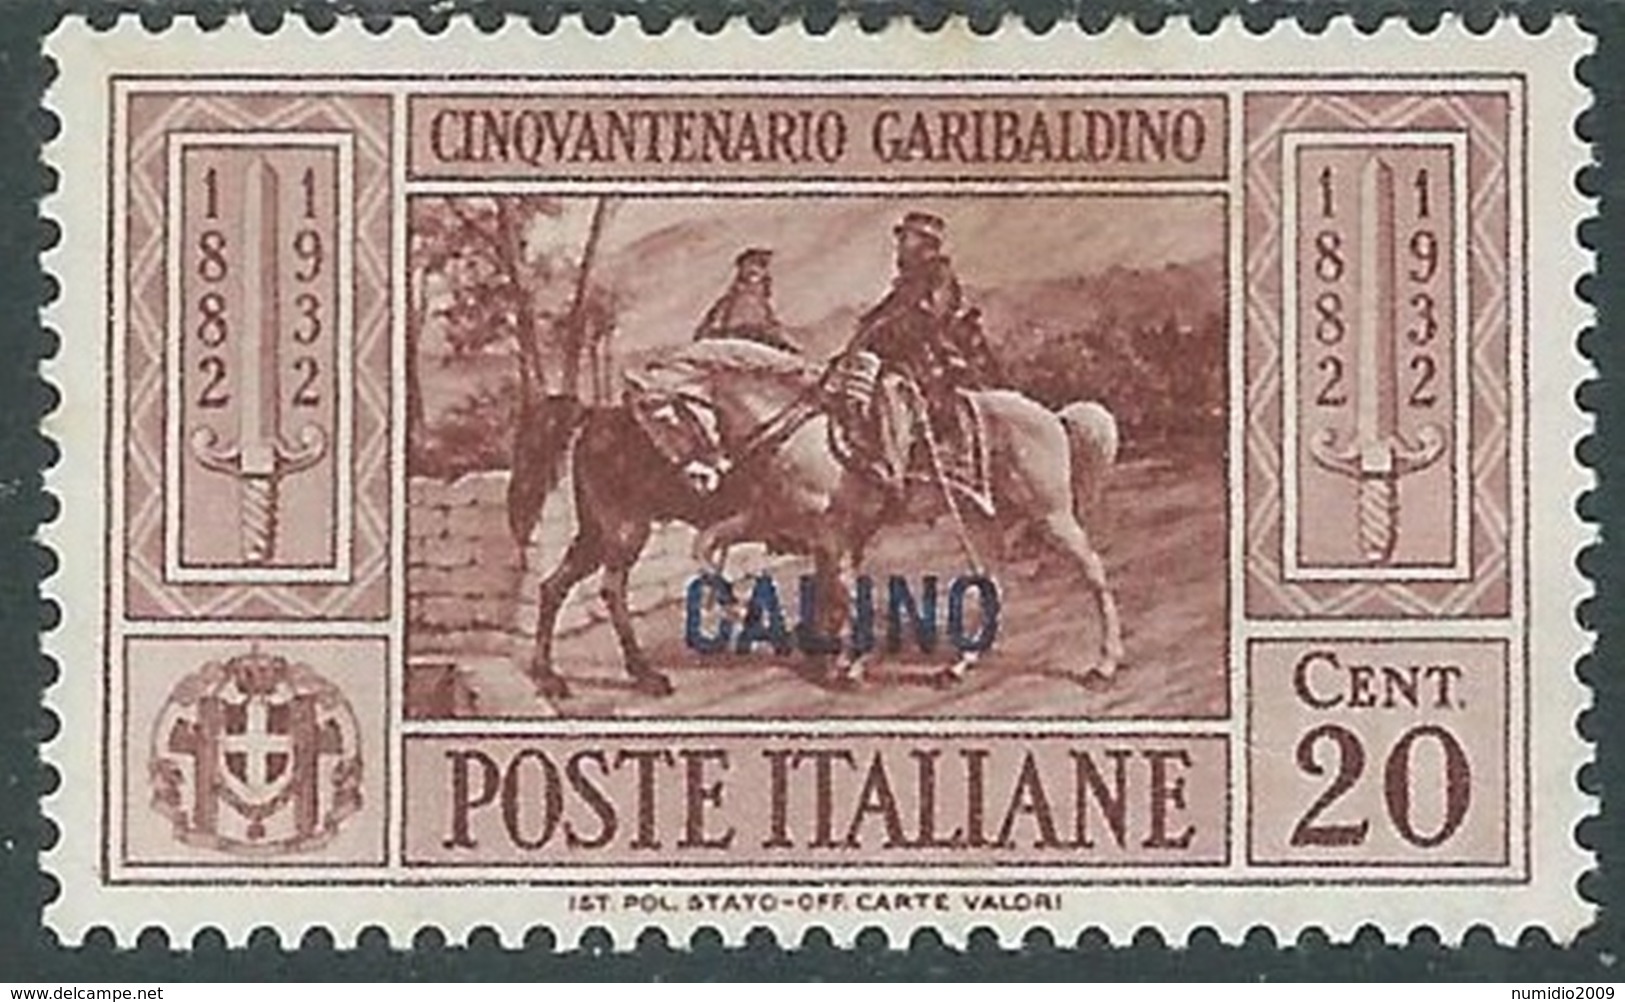 1932 EGEO CALINO GARIBALDI 20 CENT MH * - RB9-4 - Aegean (Calino)